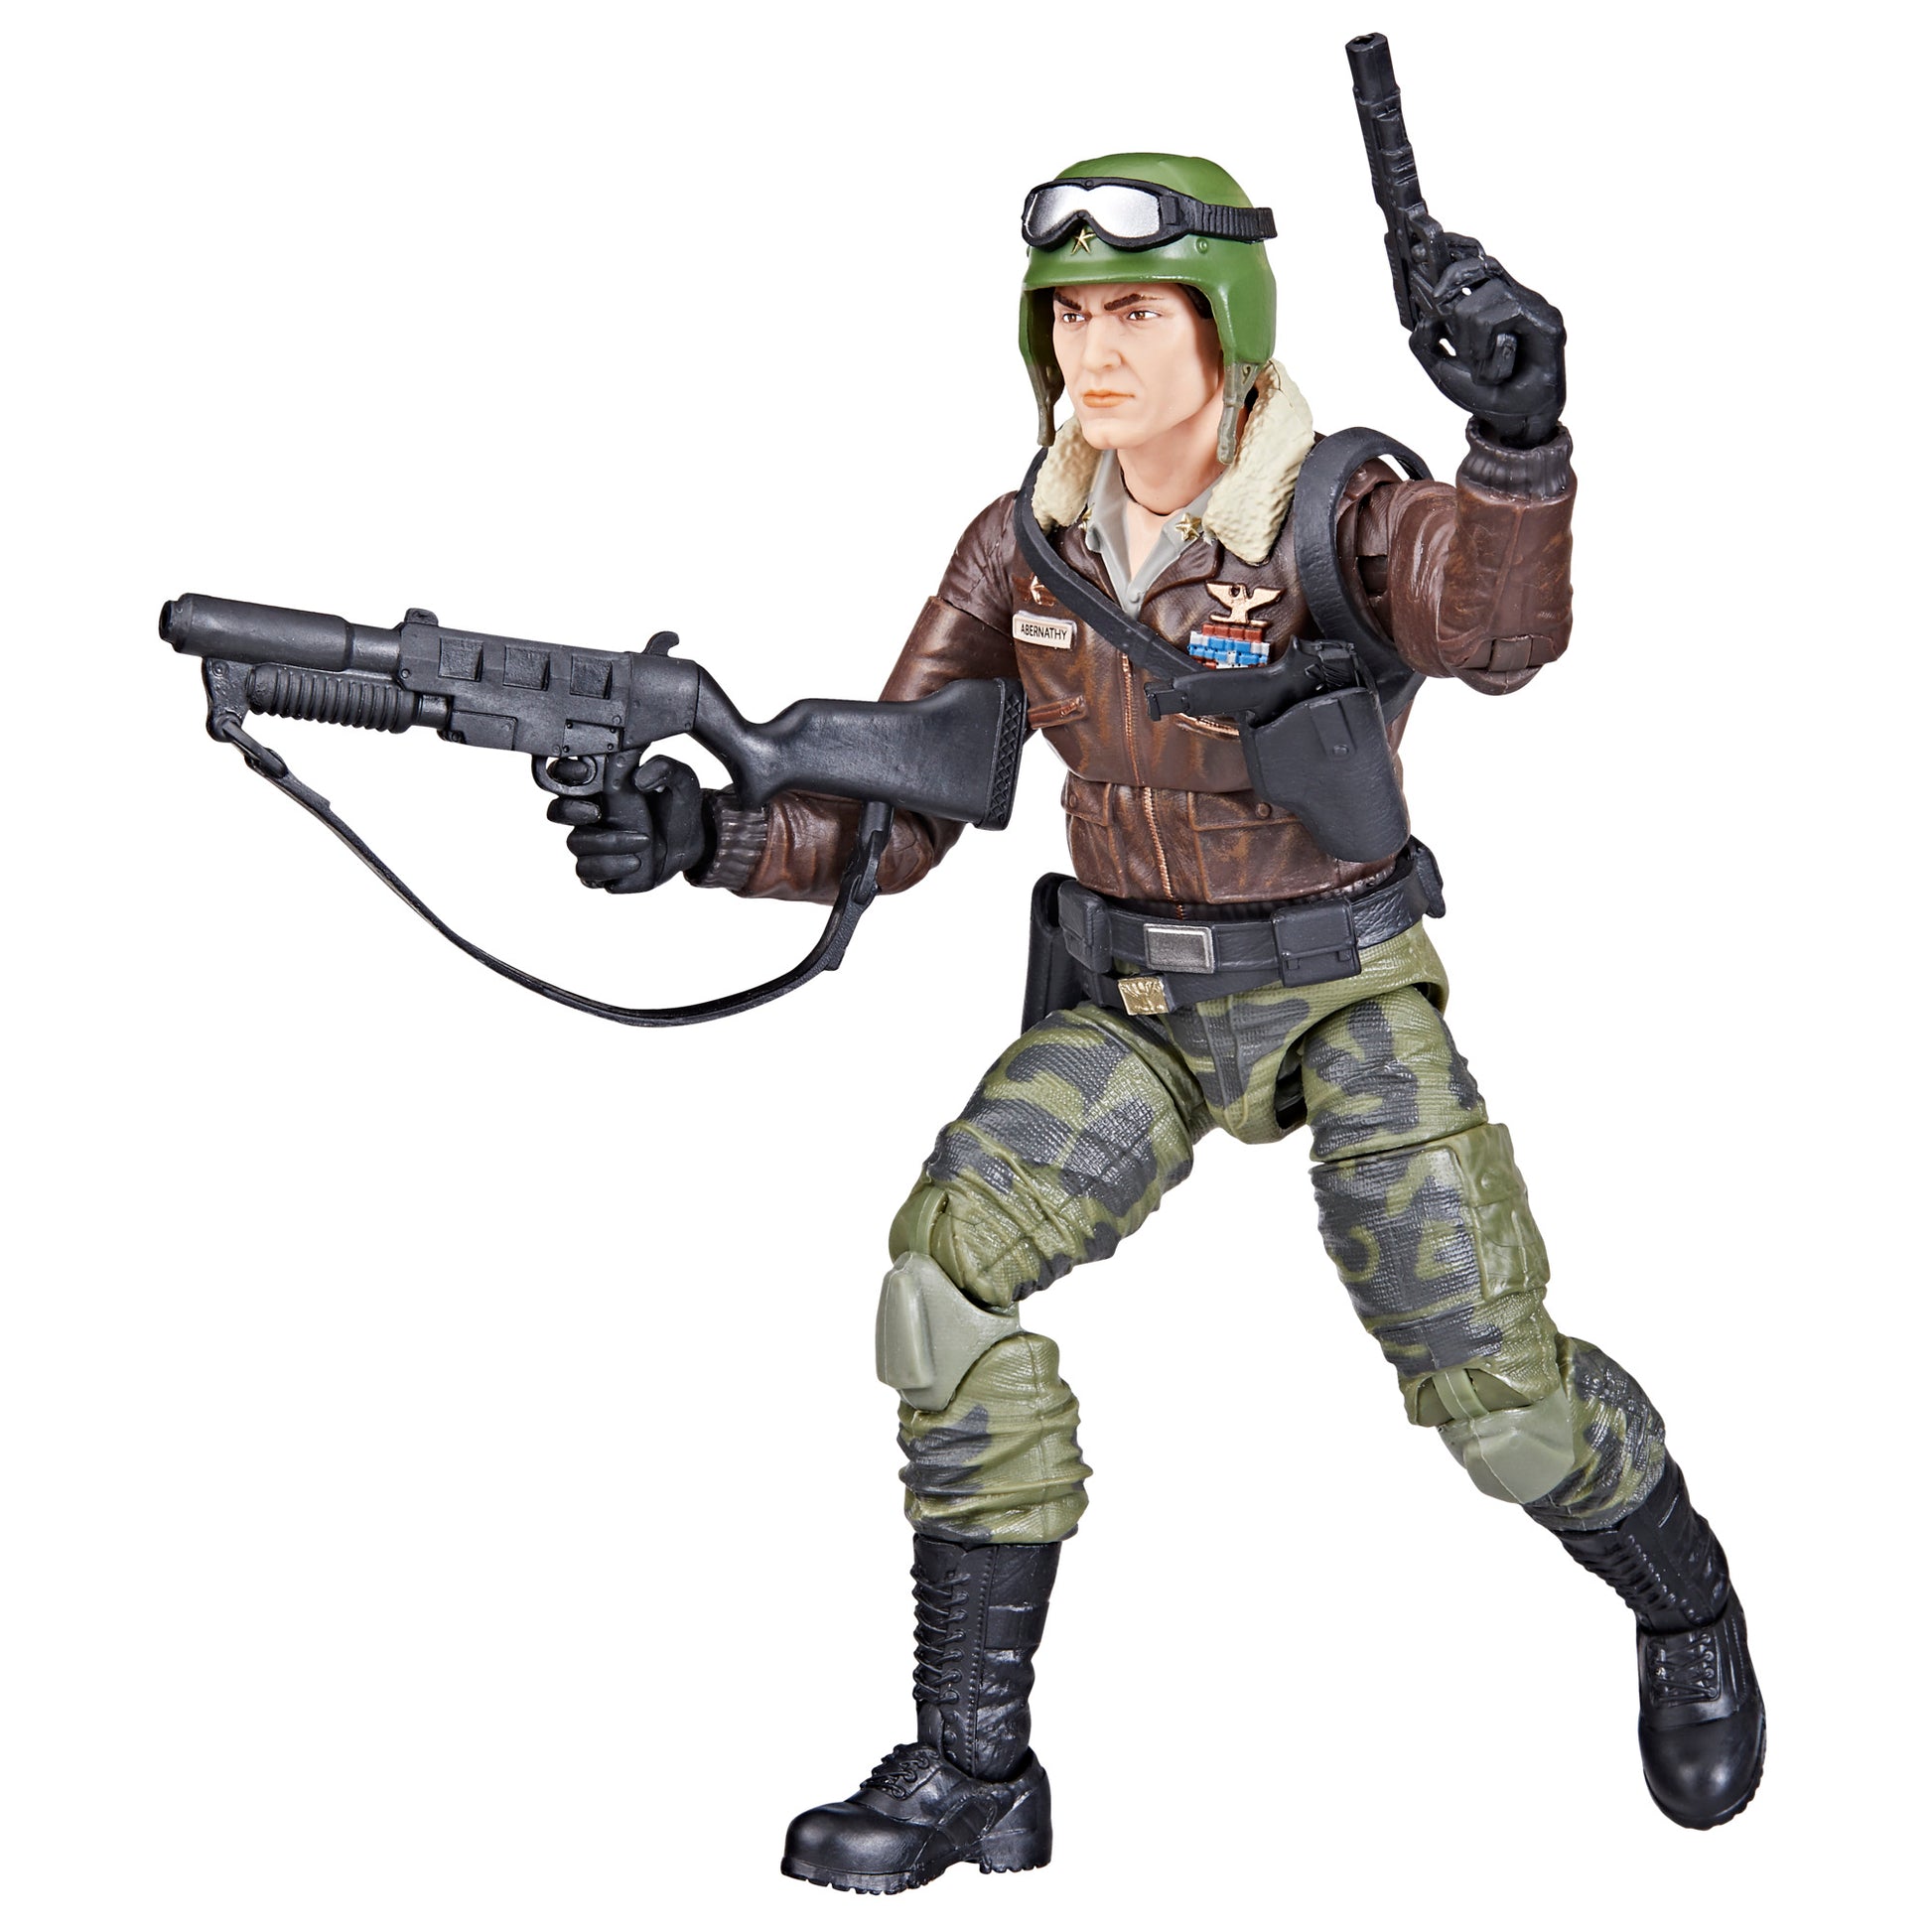 G.I. Joe Classified Series General Clayton "Hawk" Abernathy, Collectible G.I. Joe Action Figure (6"), 103 2